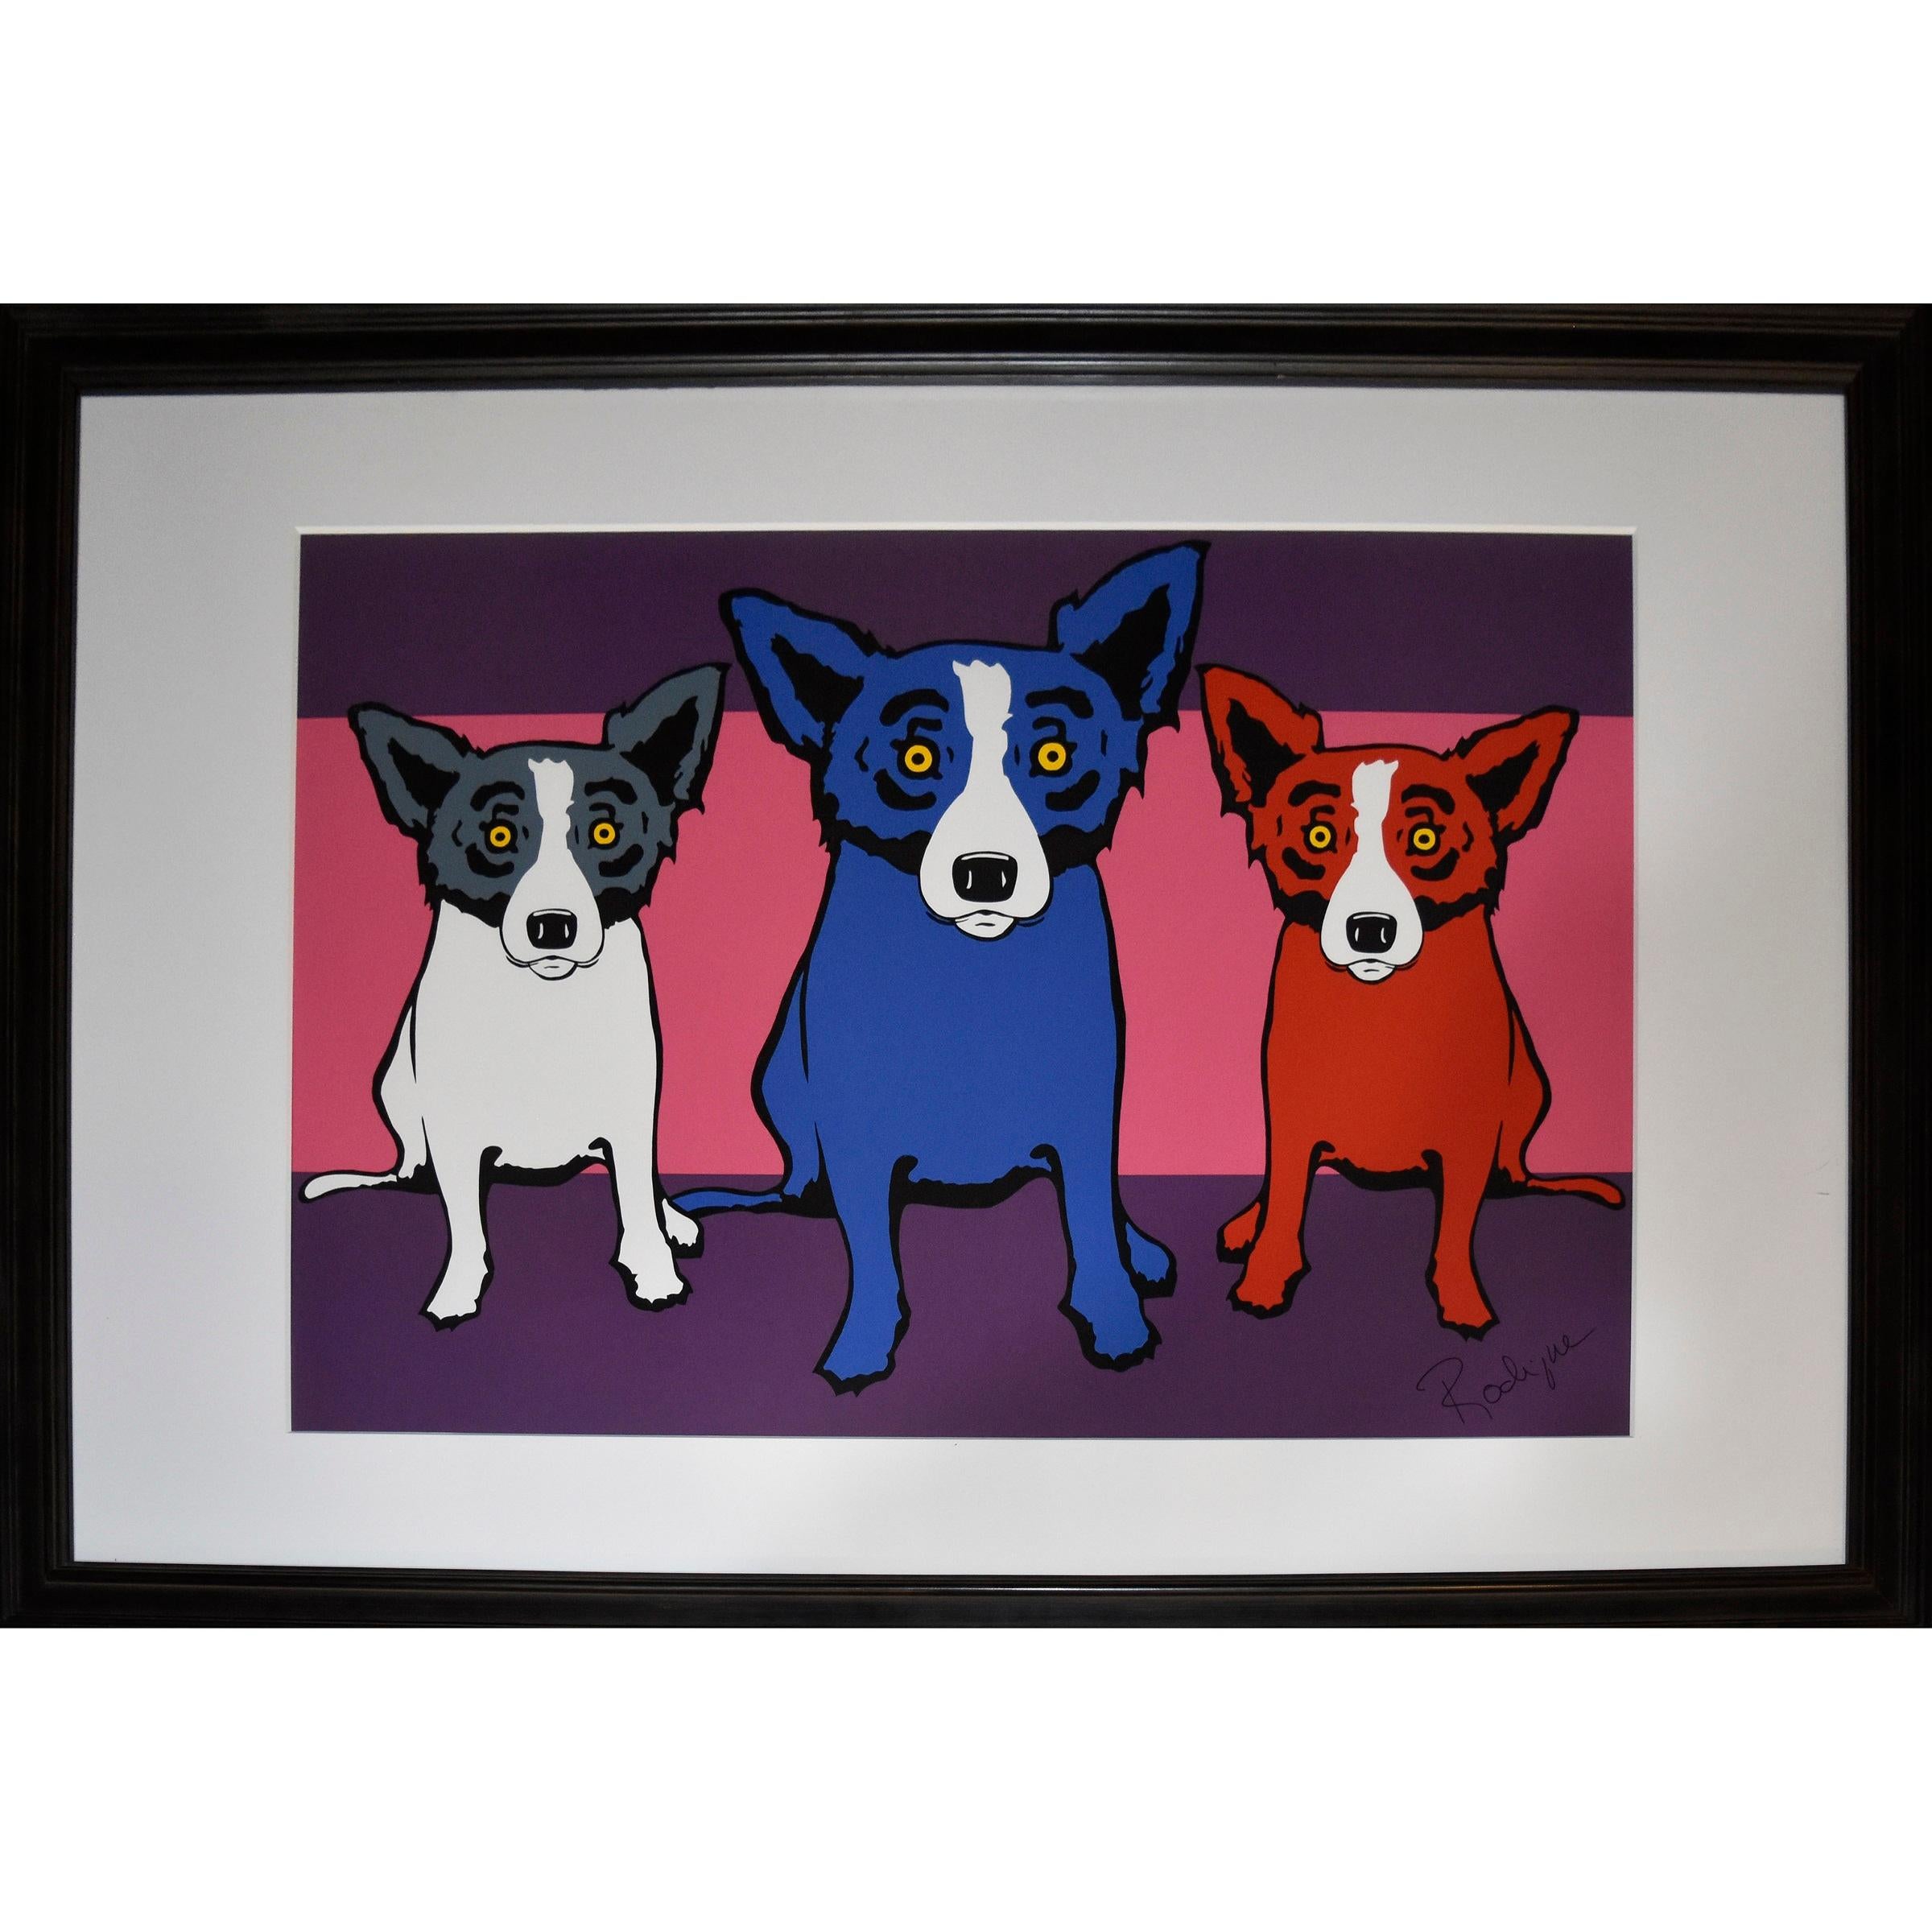 George Rodrigue Animal Print - Blue Dog "Pink Shoelaces" - Signed Numbered Print